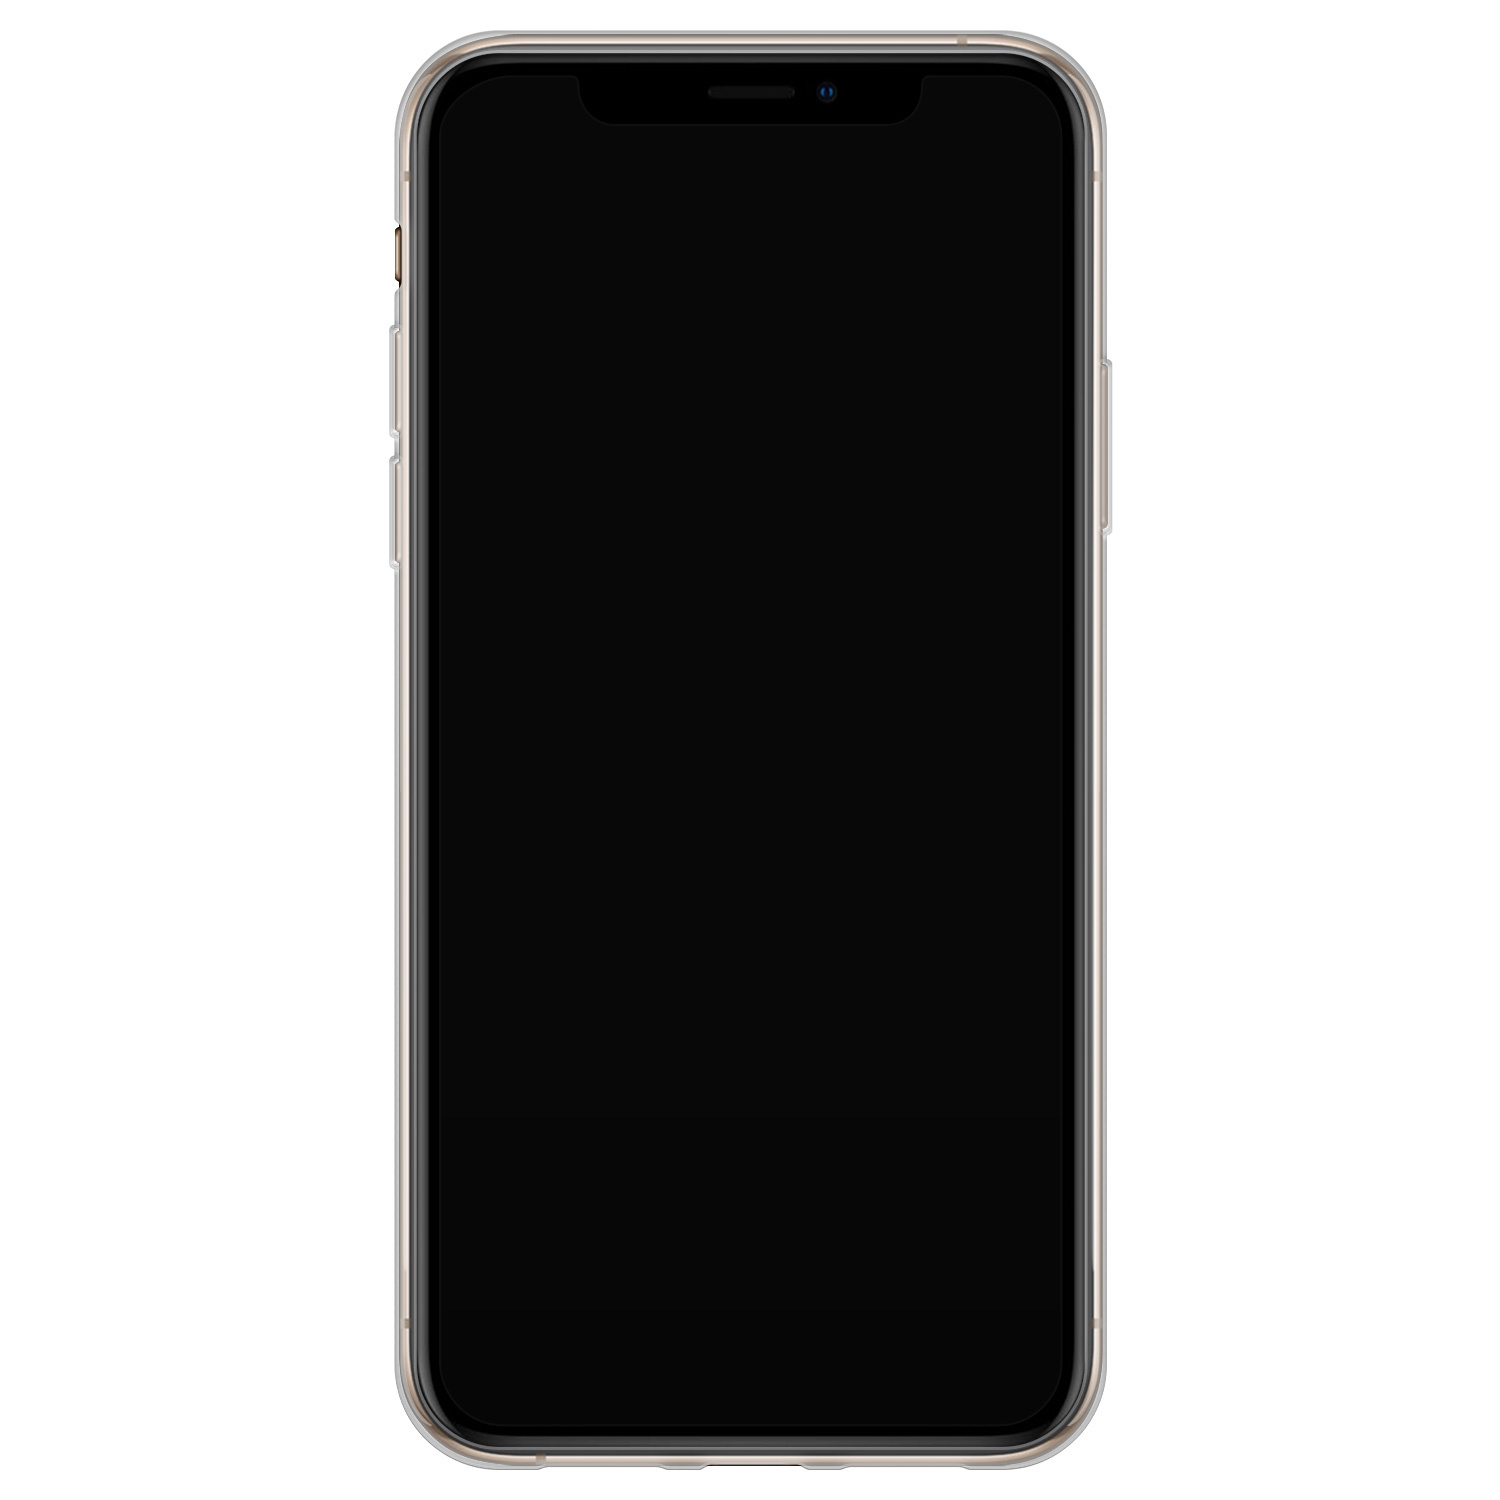 Leuke Telefoonhoesjes iPhone XS Max siliconen hoesje - Marmer roze grijs